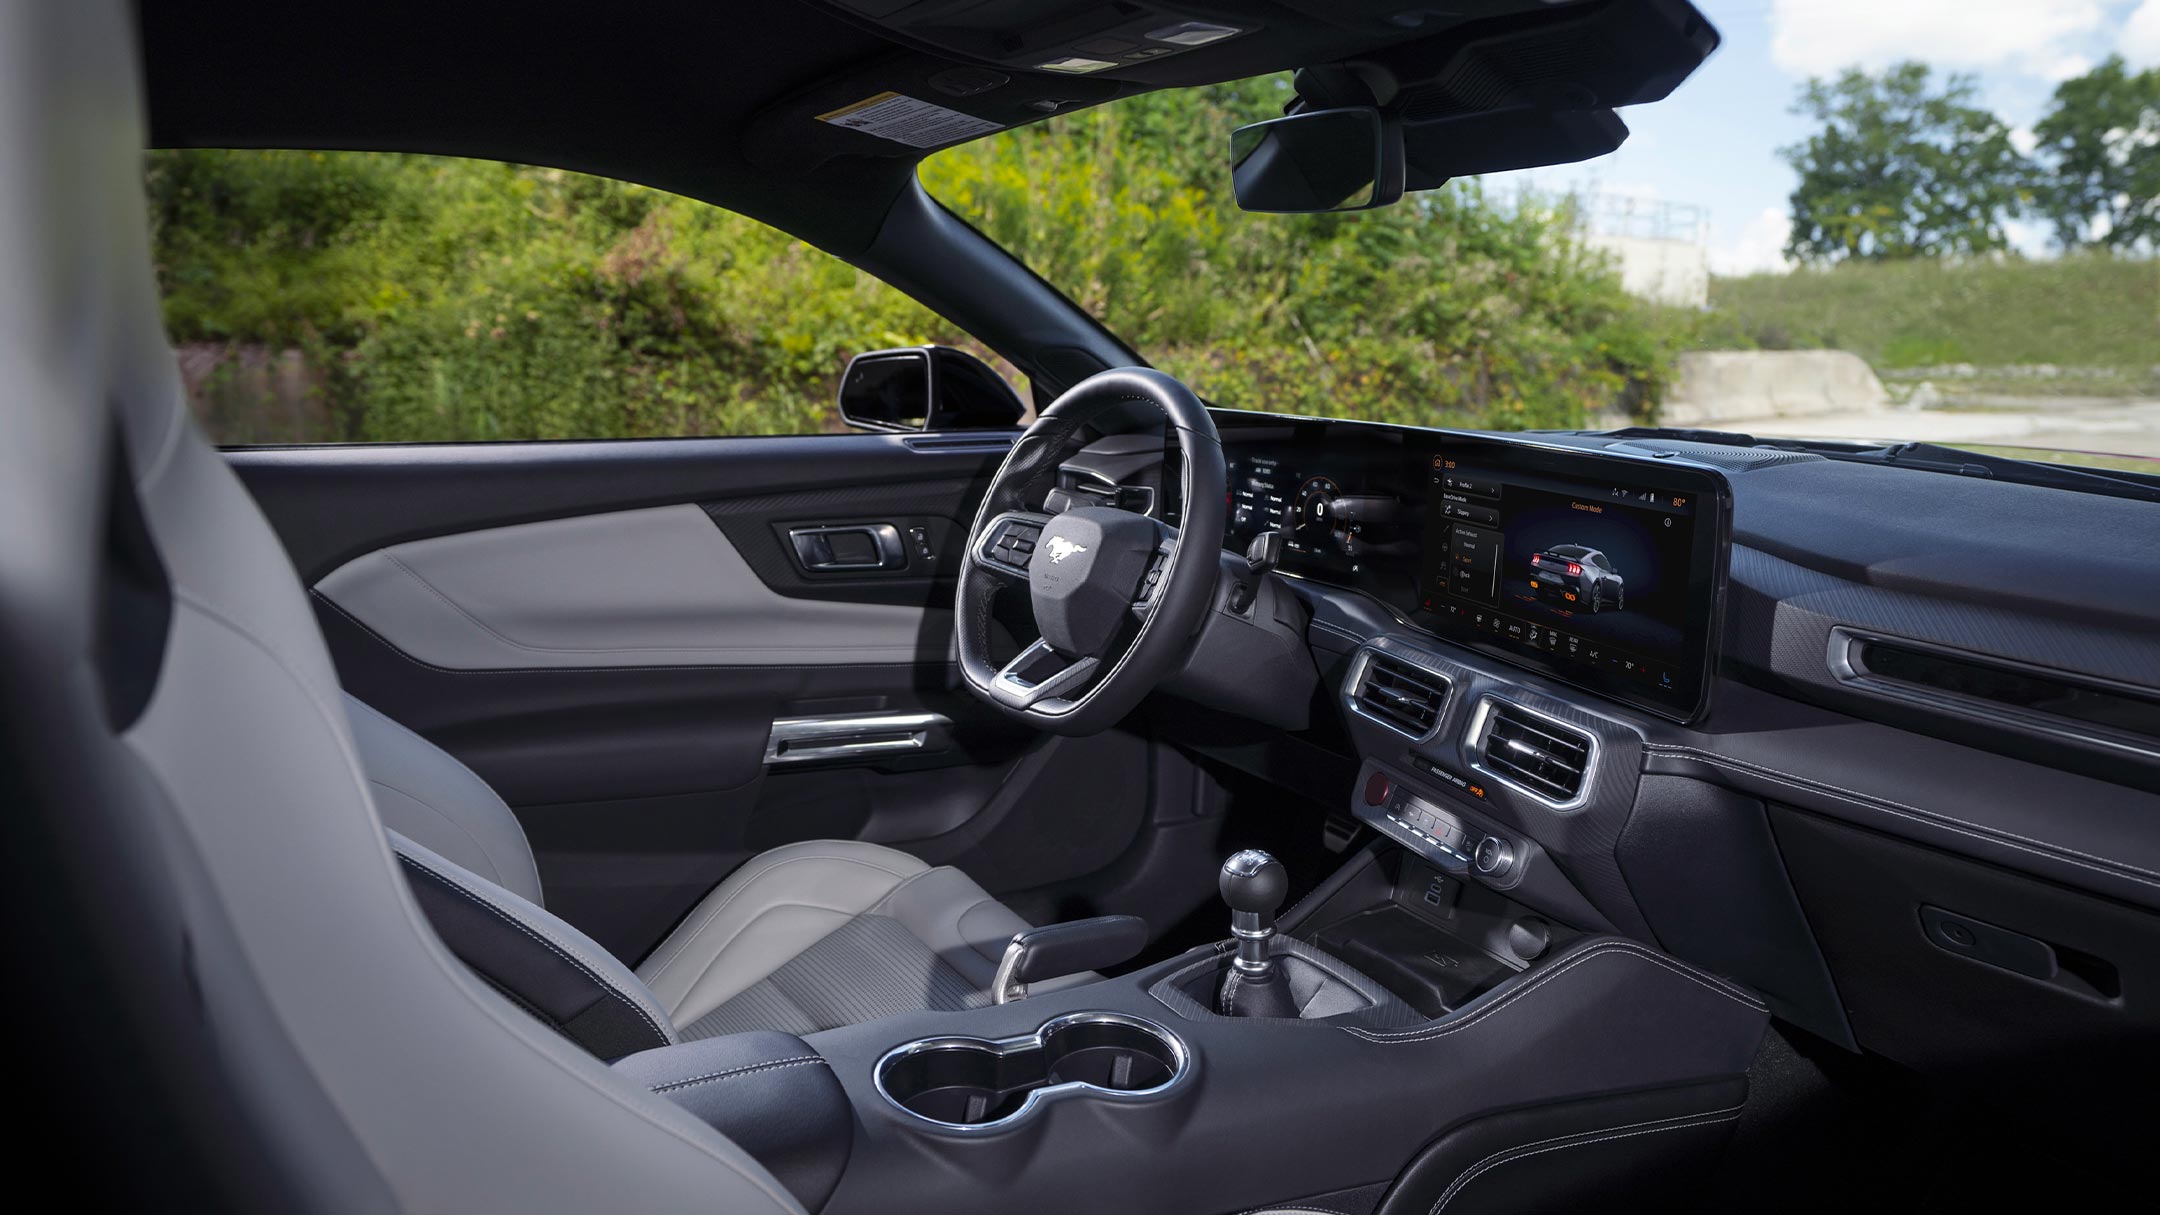 New Mustang interior